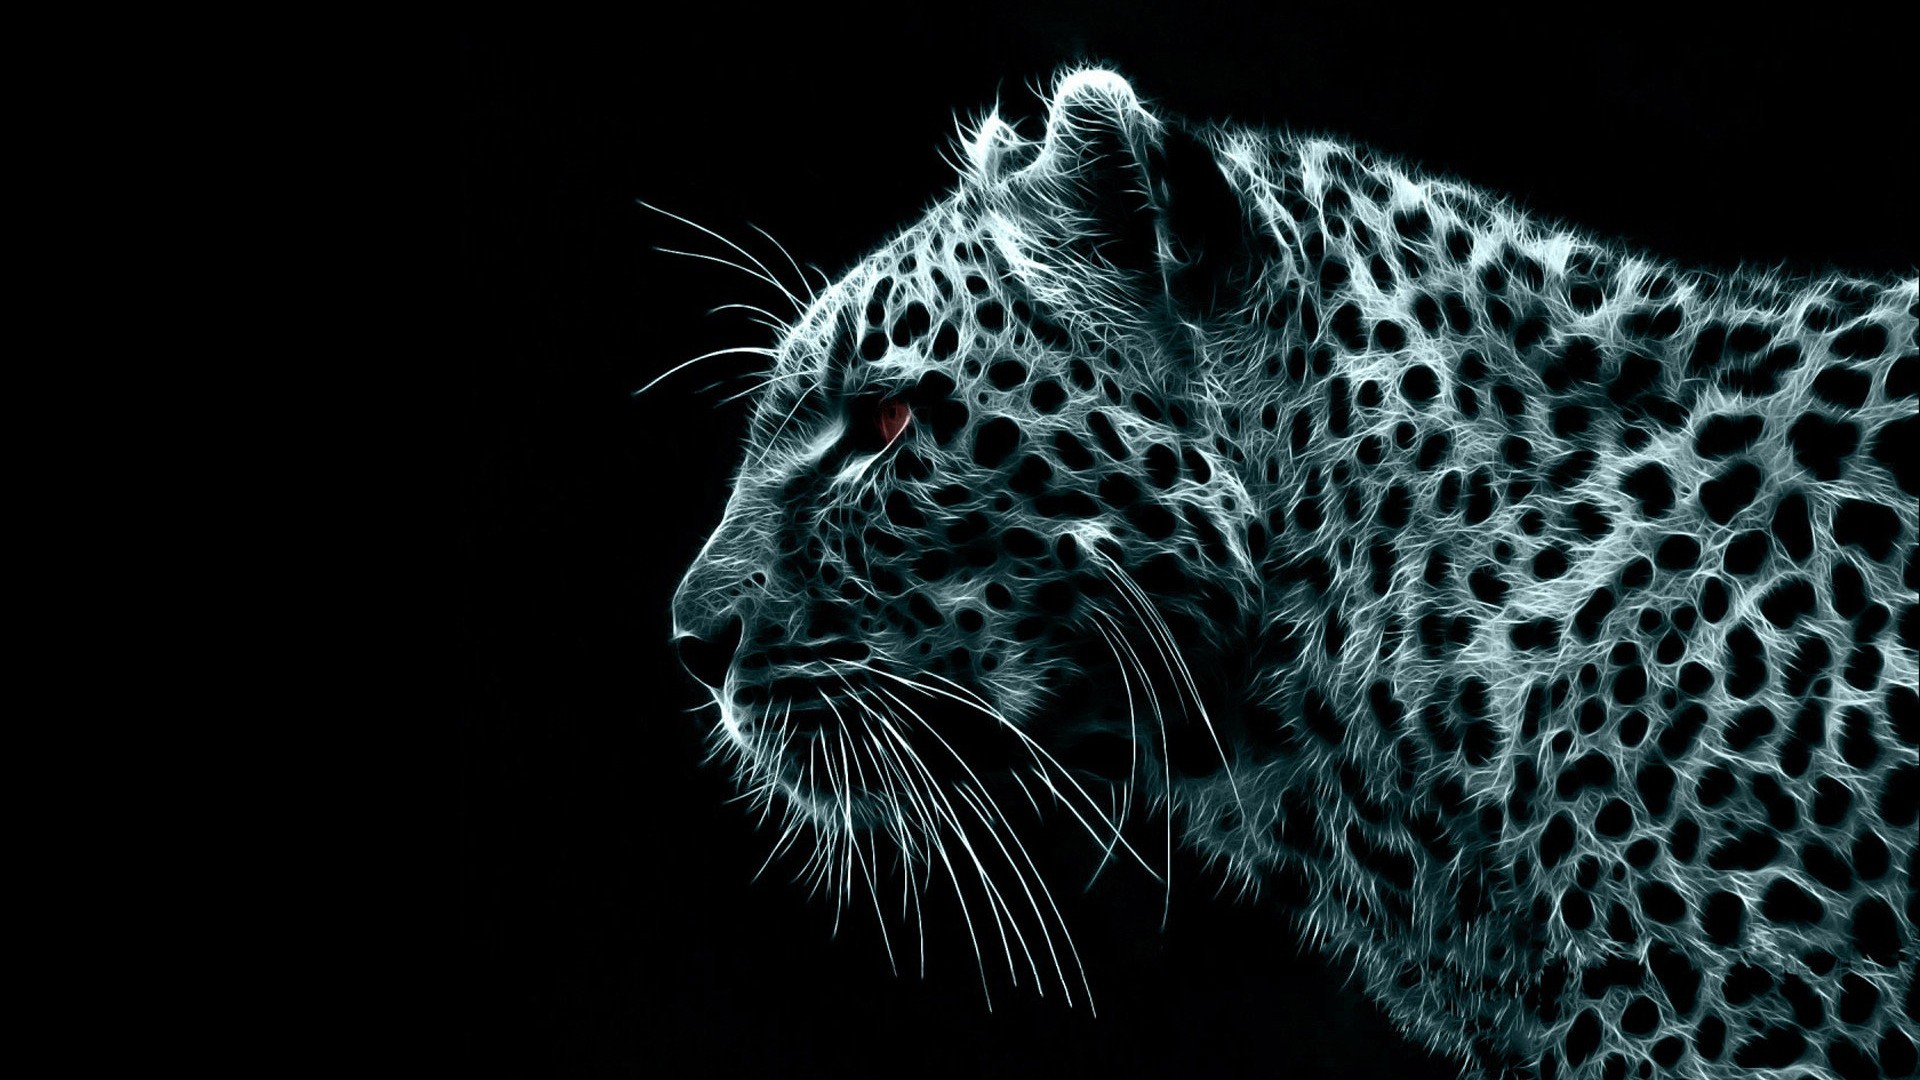 Wallpaper Leopard Desktop In High Resolution For Get